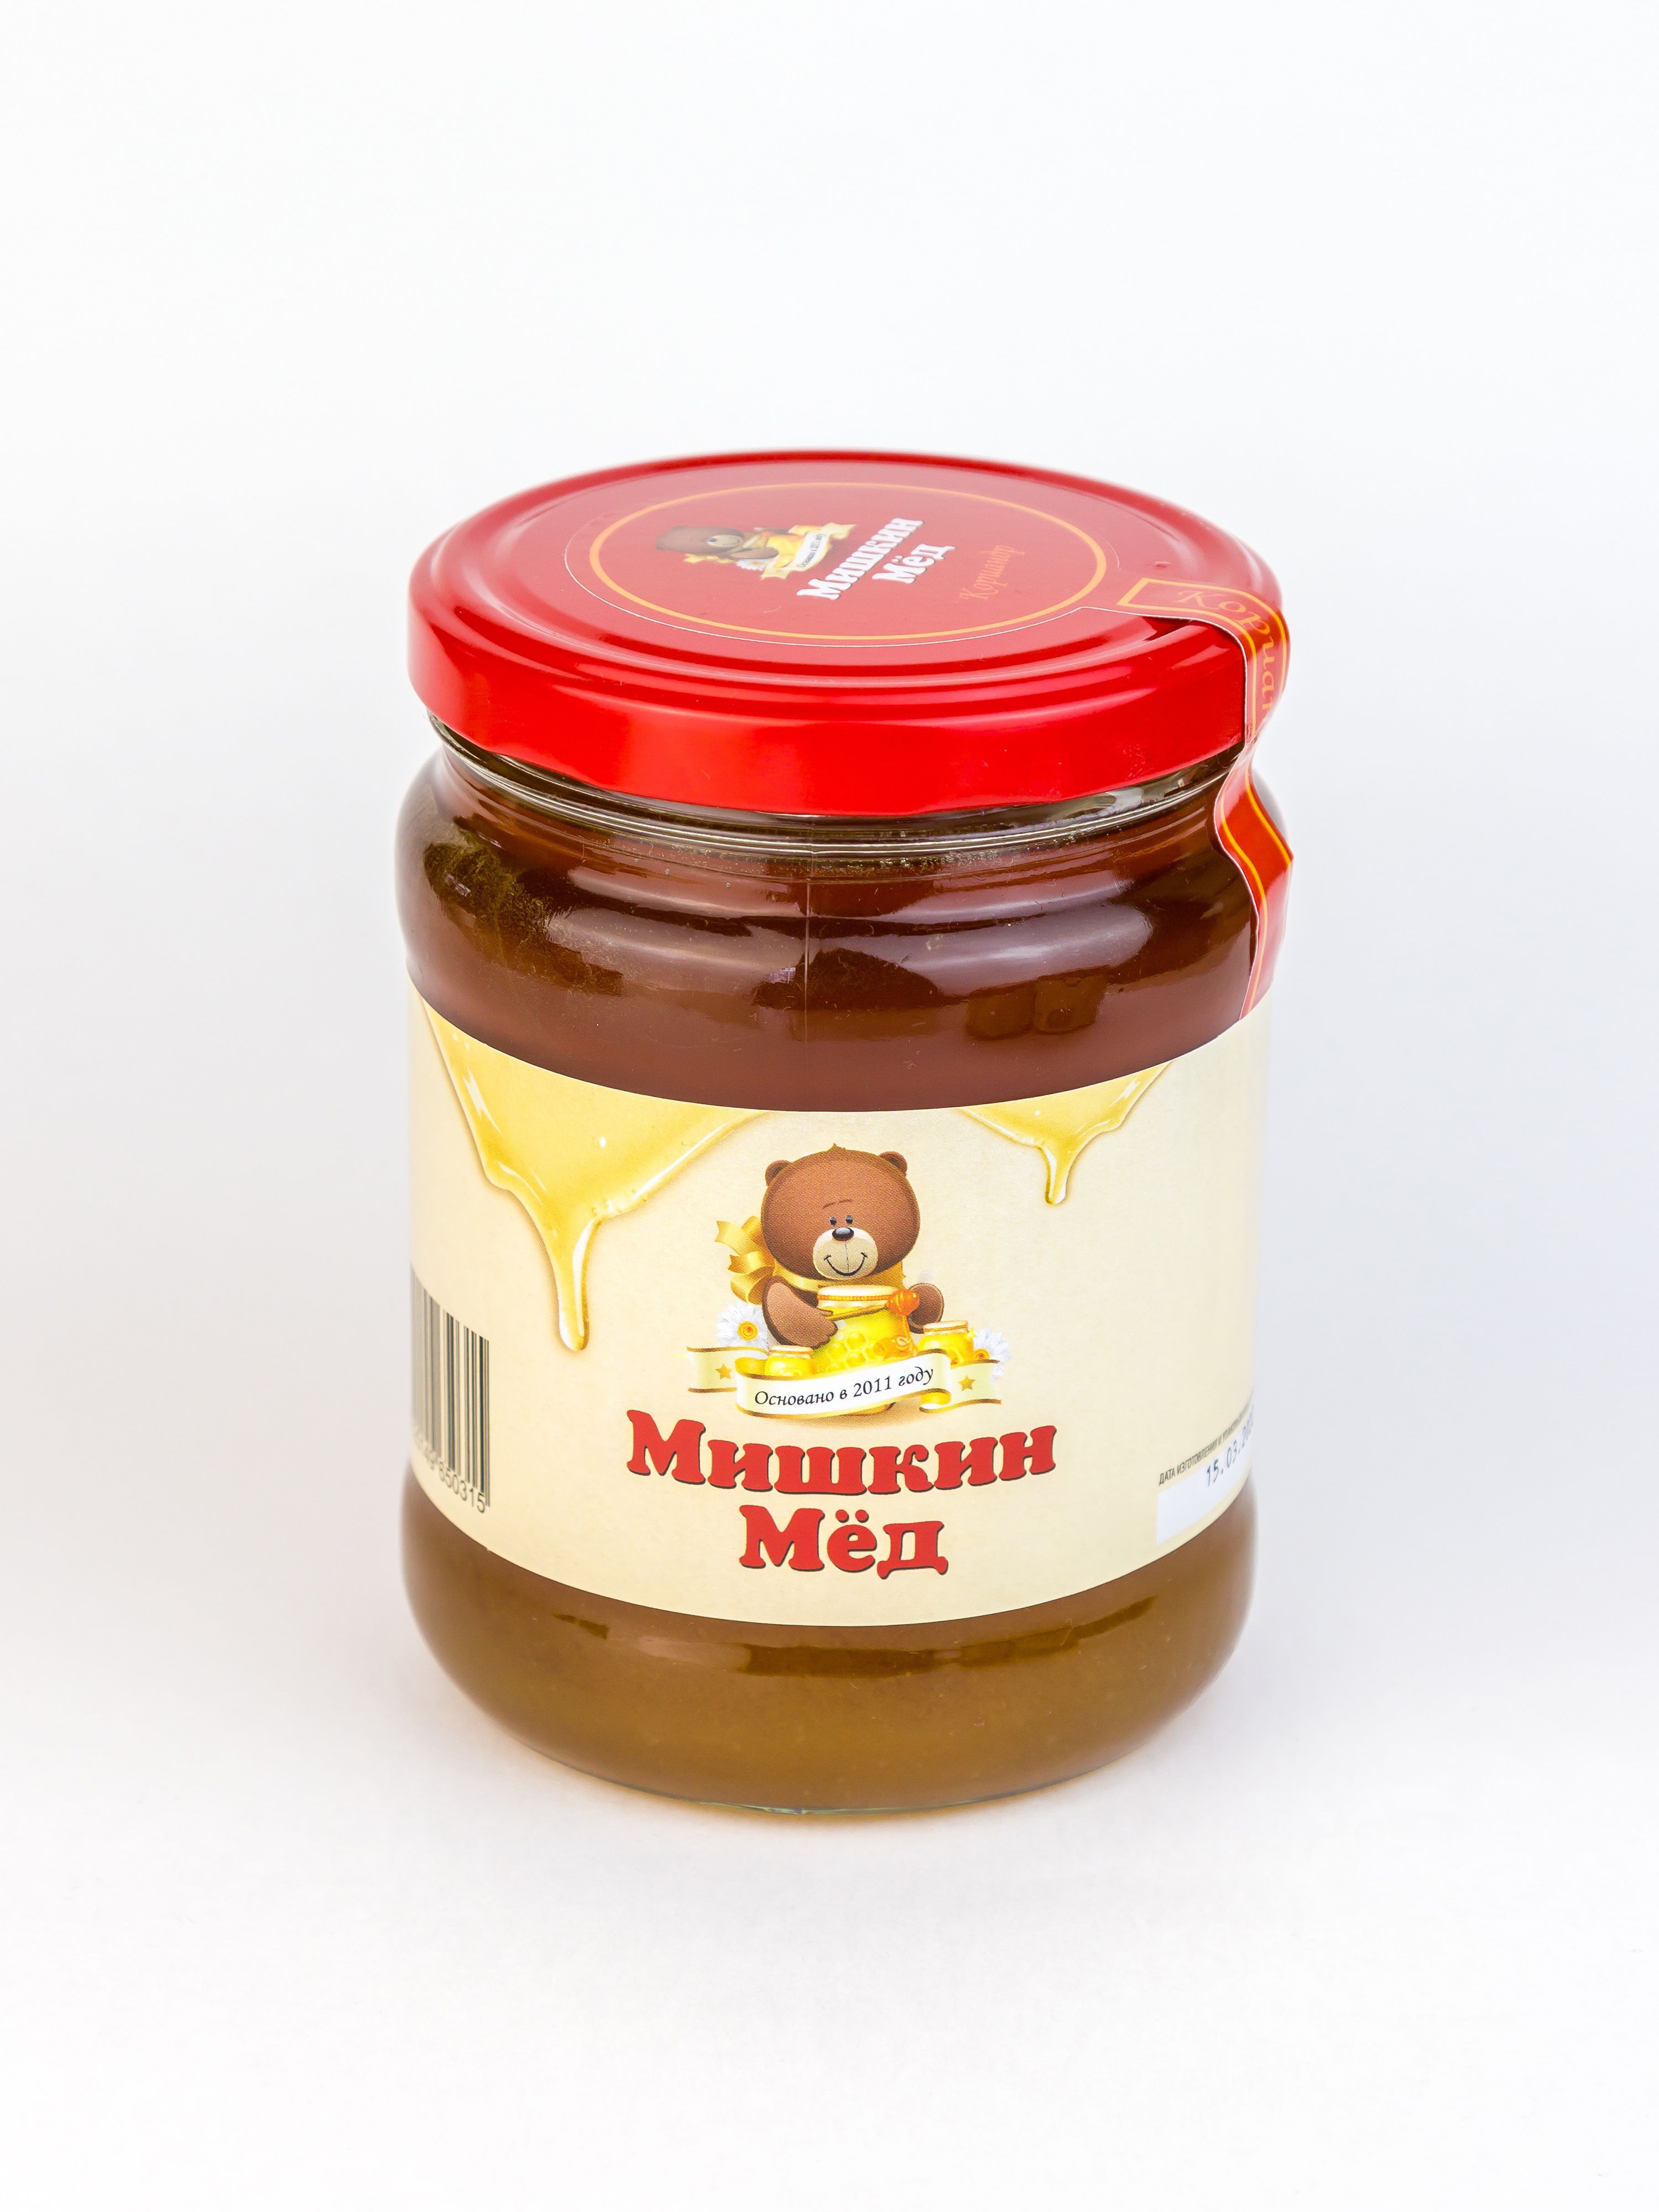 Мед кориандр. Мёд кориандровый. Мишкин мед этикетка. Coriander Honey.